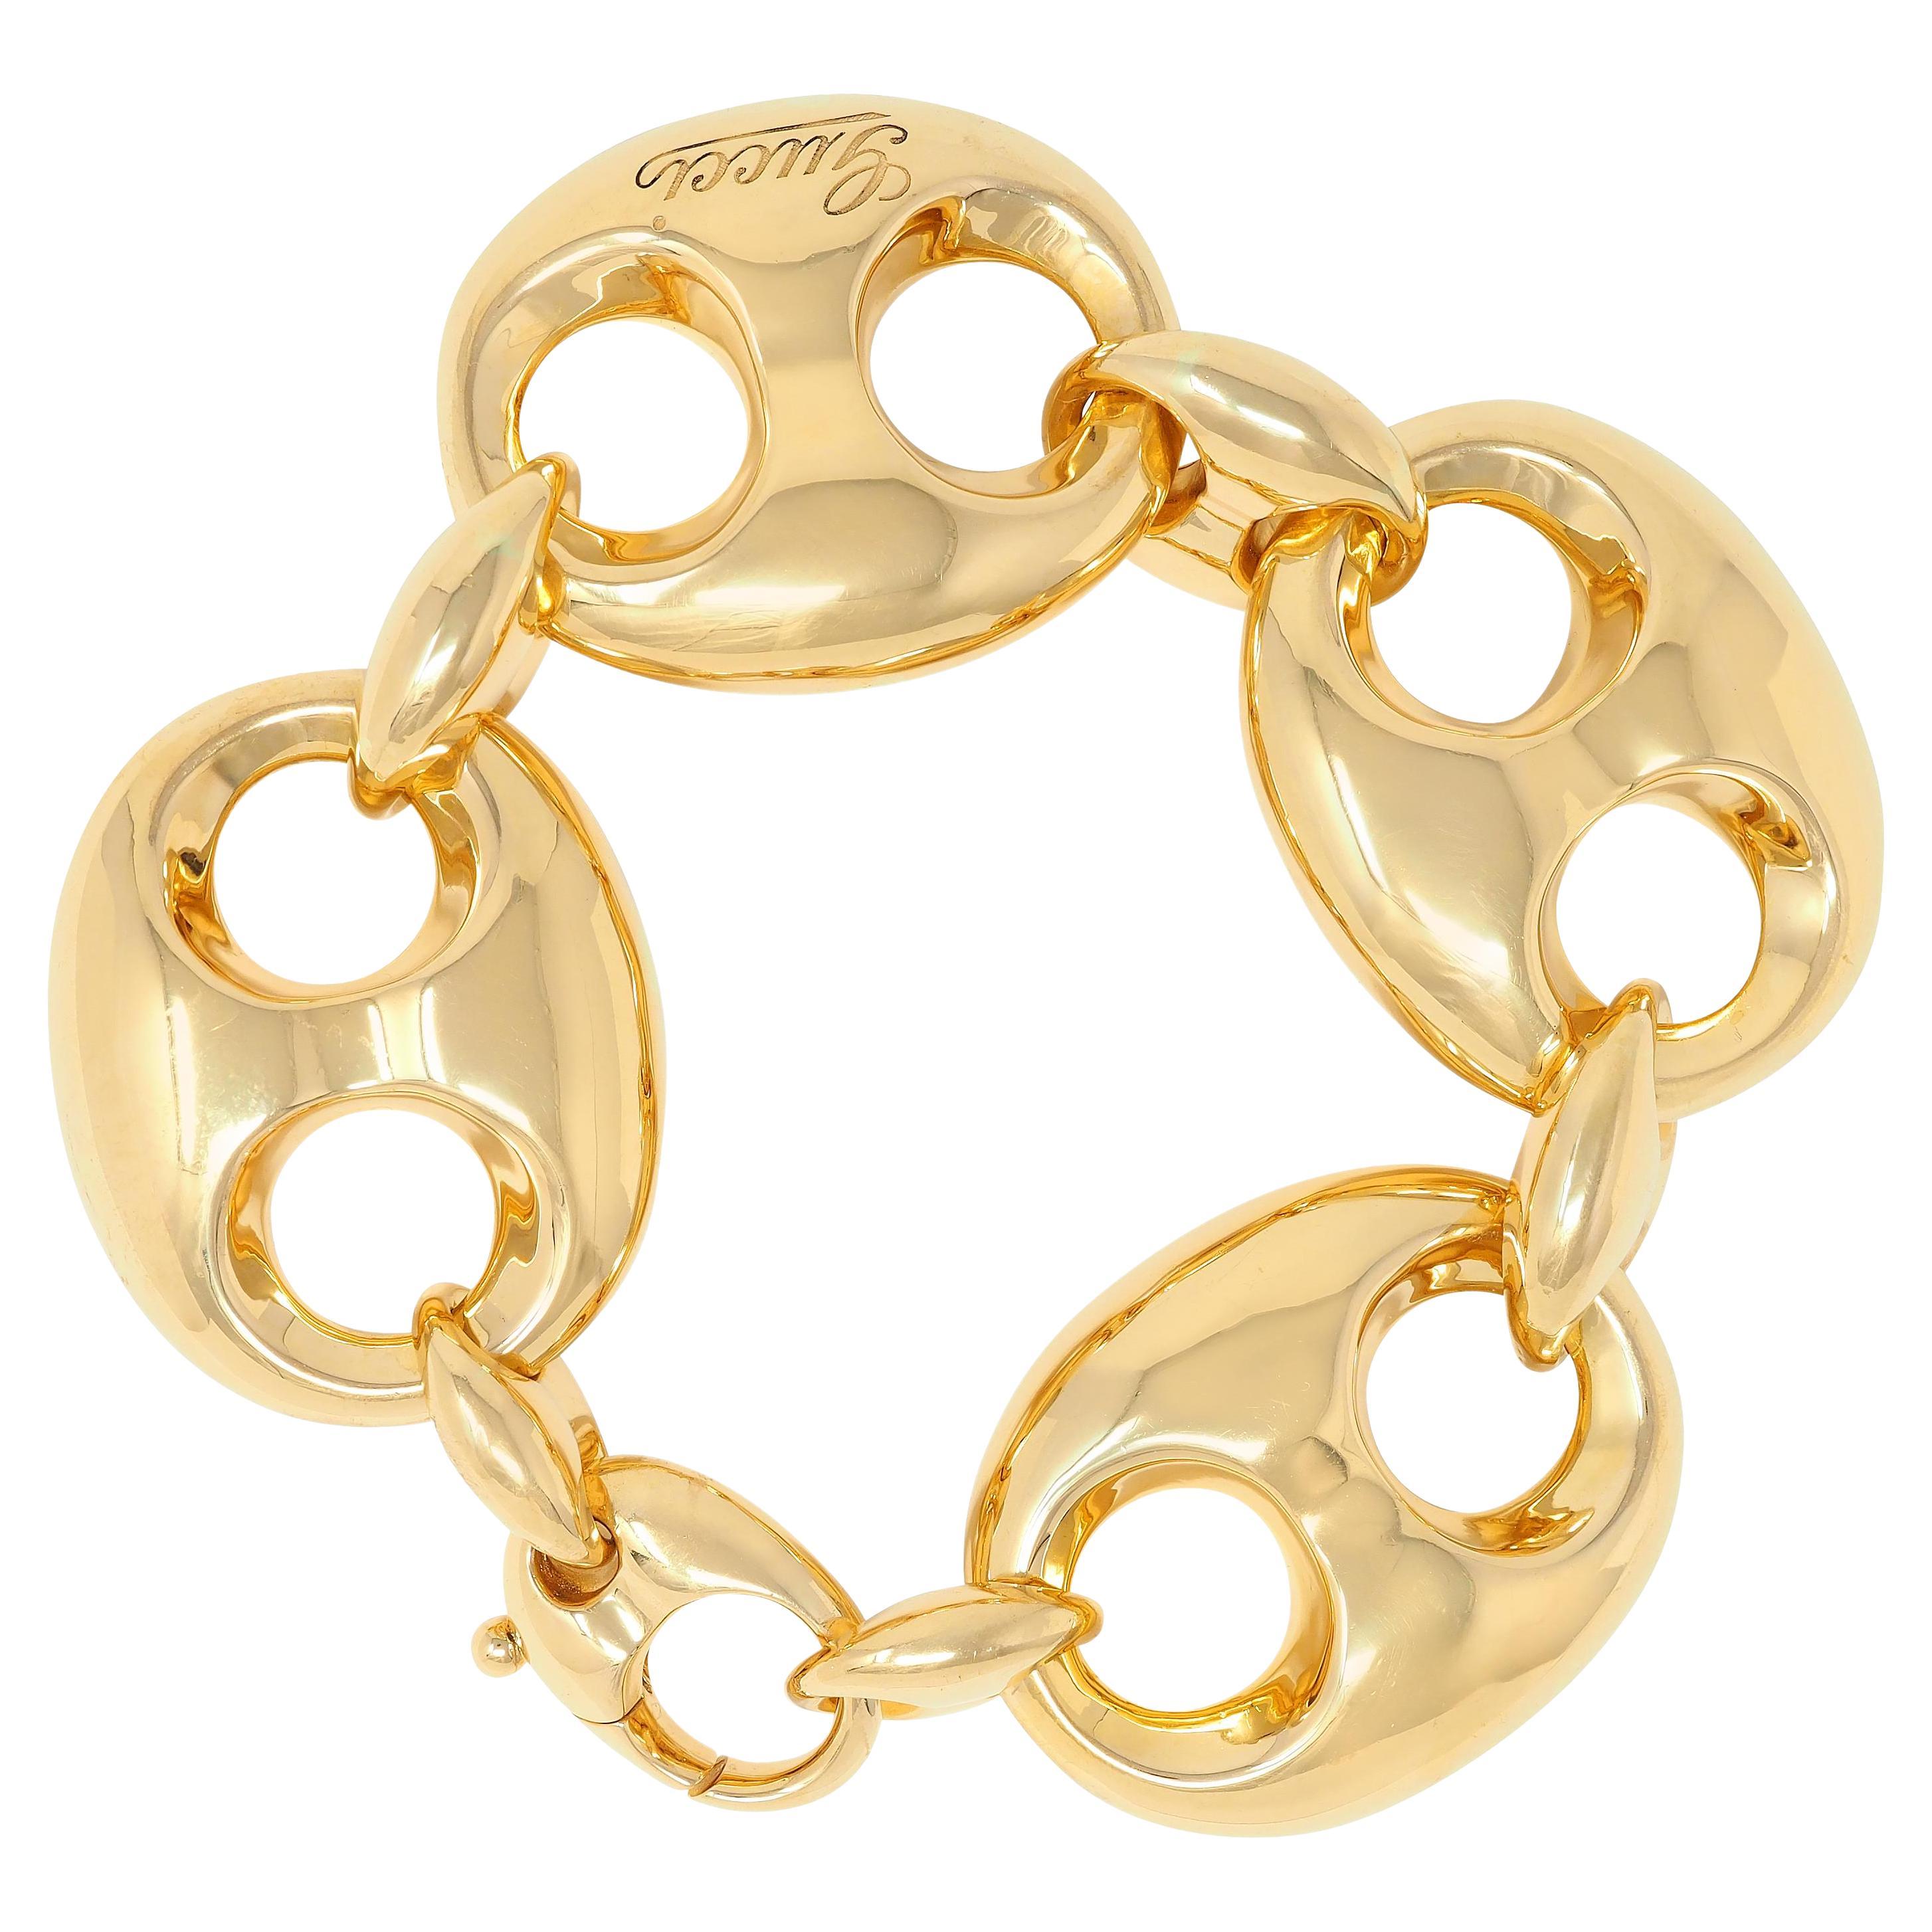 Gucci 2006 18 Karat Yellow Gold Puffed Mariner Link Bracelet For Sale